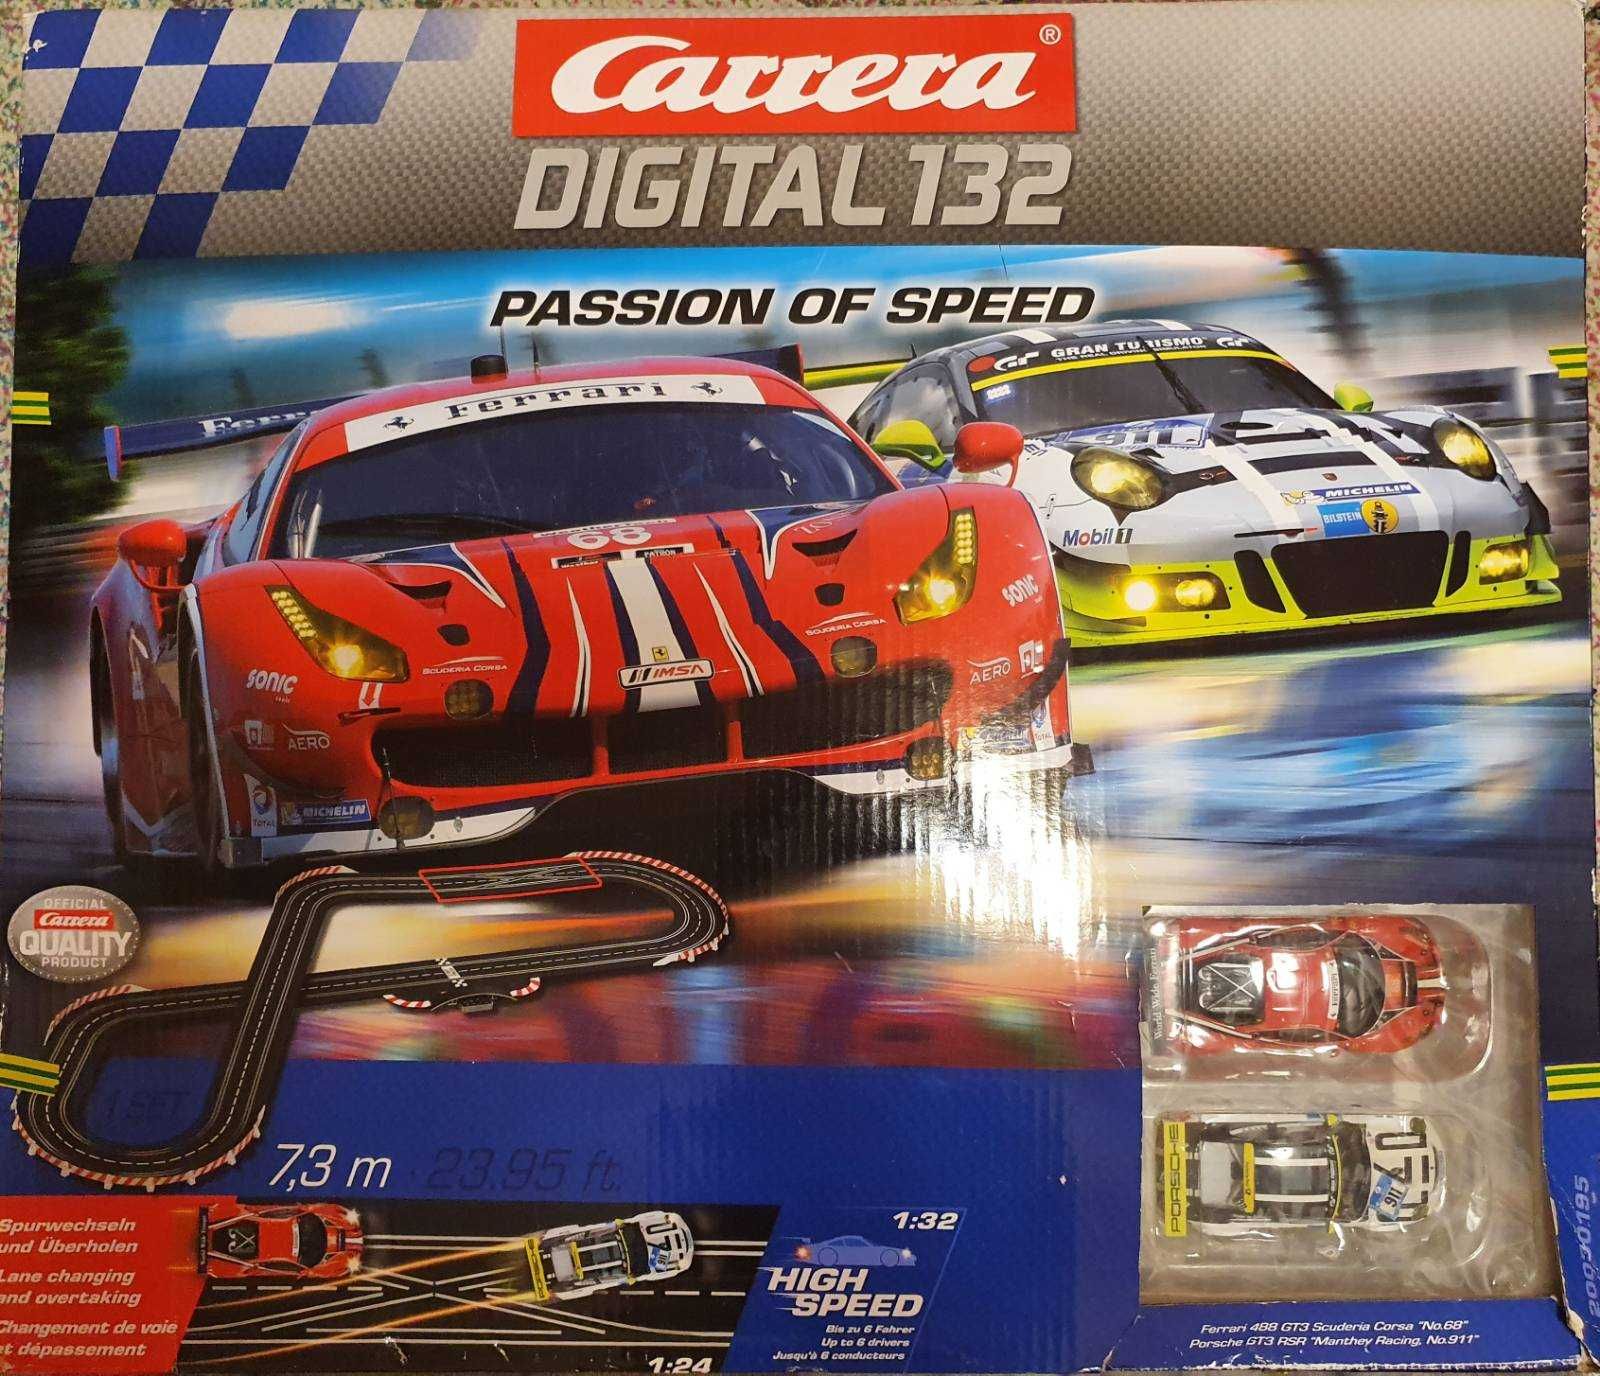 Carrera Digital 132 Passion of speed